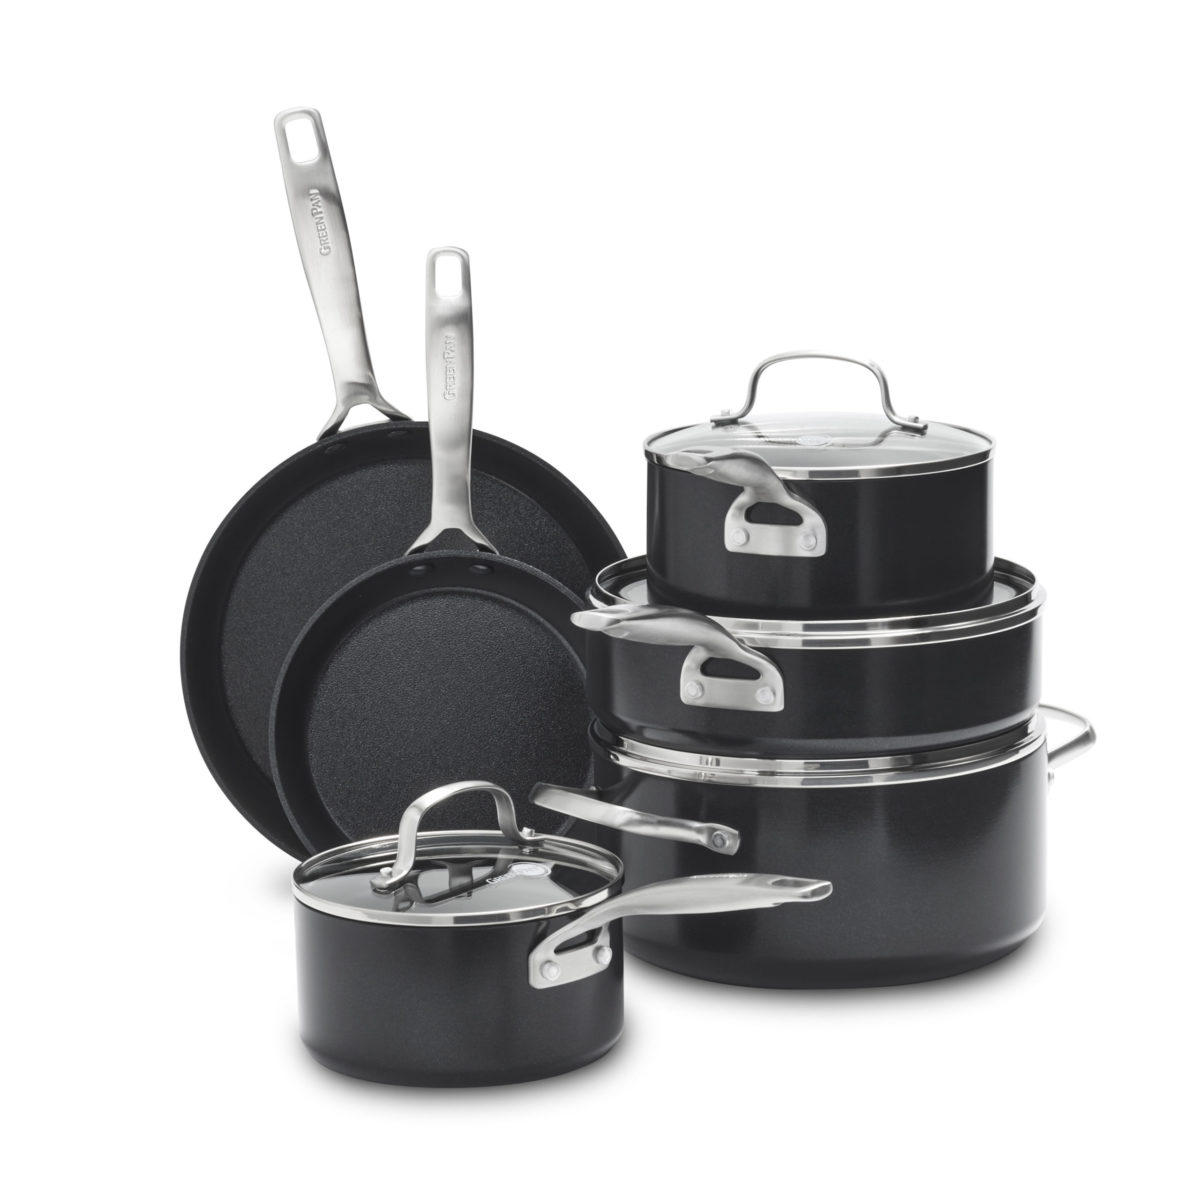 a set of pots and pans